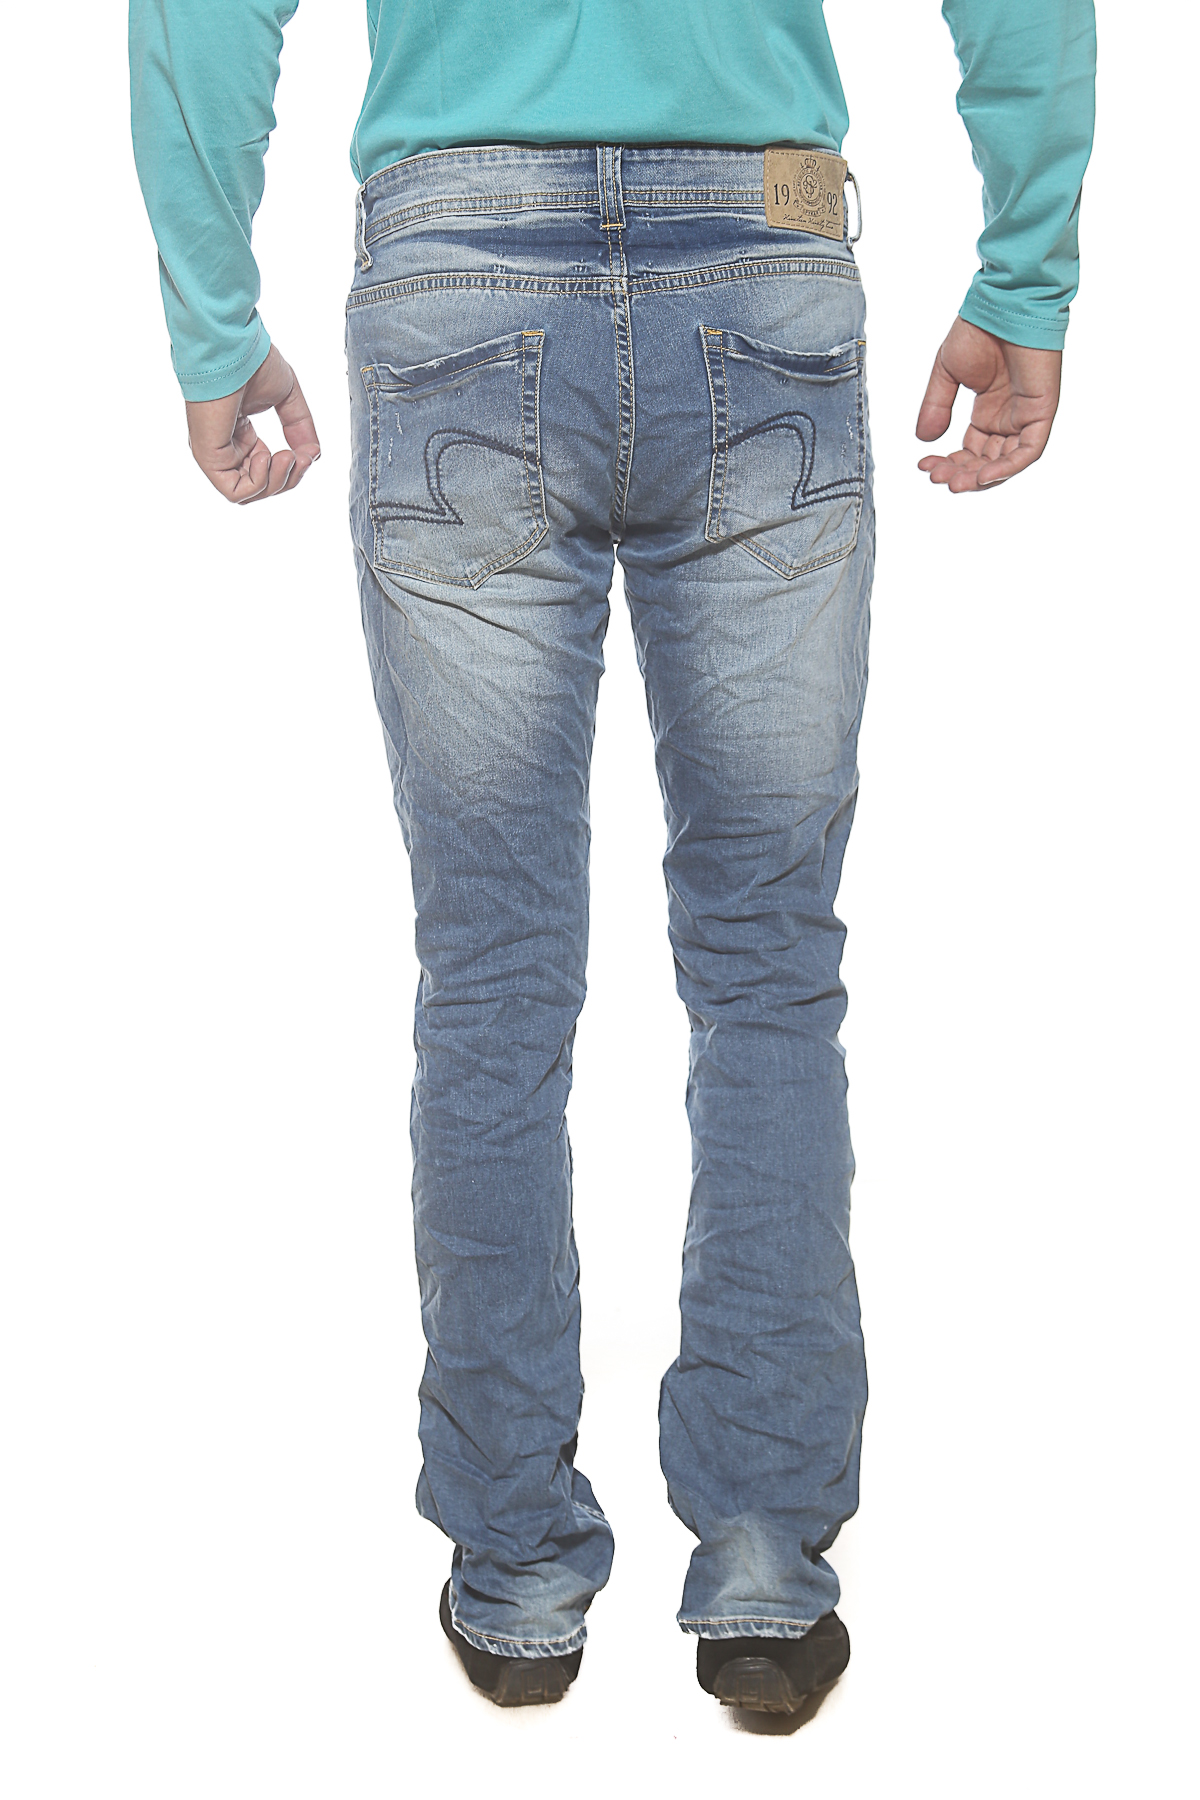 Buy Spykar Blue Low Rise Slim Fit Jeans (Rafter)RAF-W15 Online @ ₹1484 ...